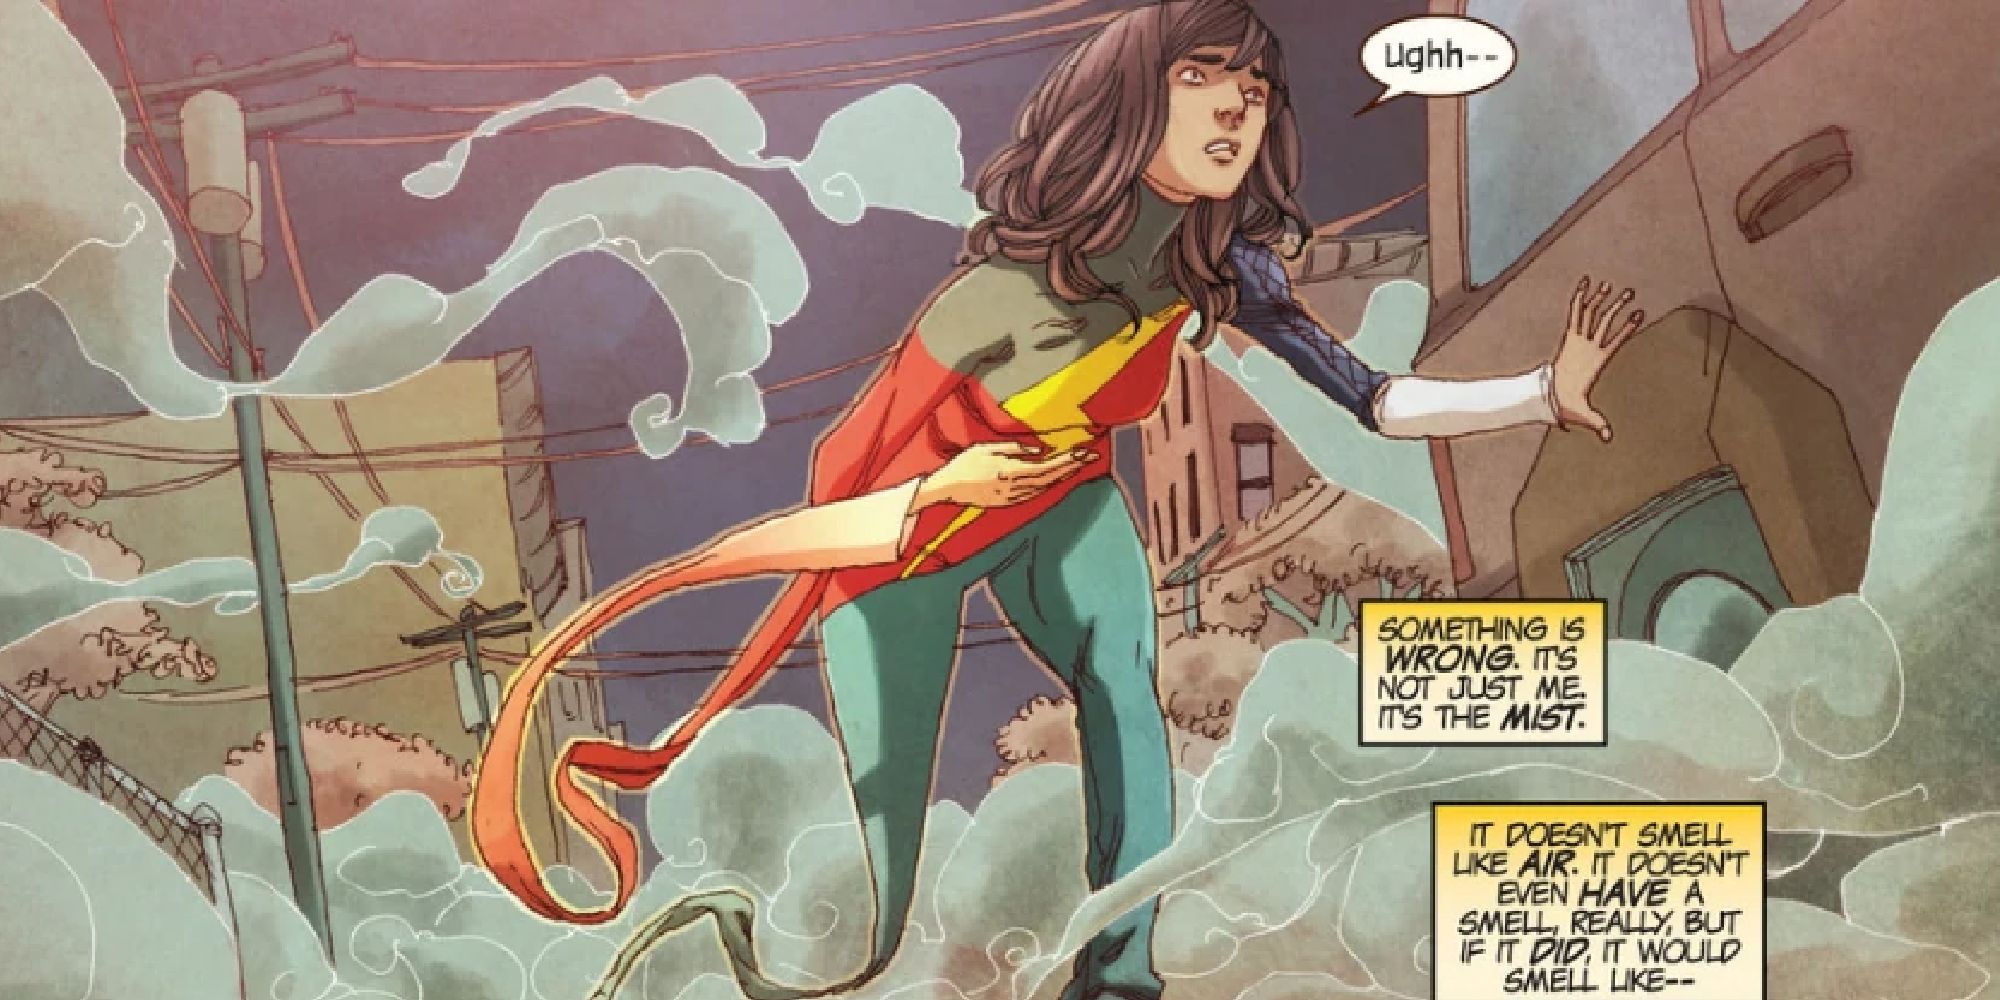 Kamala Khan walking through Terrigen Mist in the comics